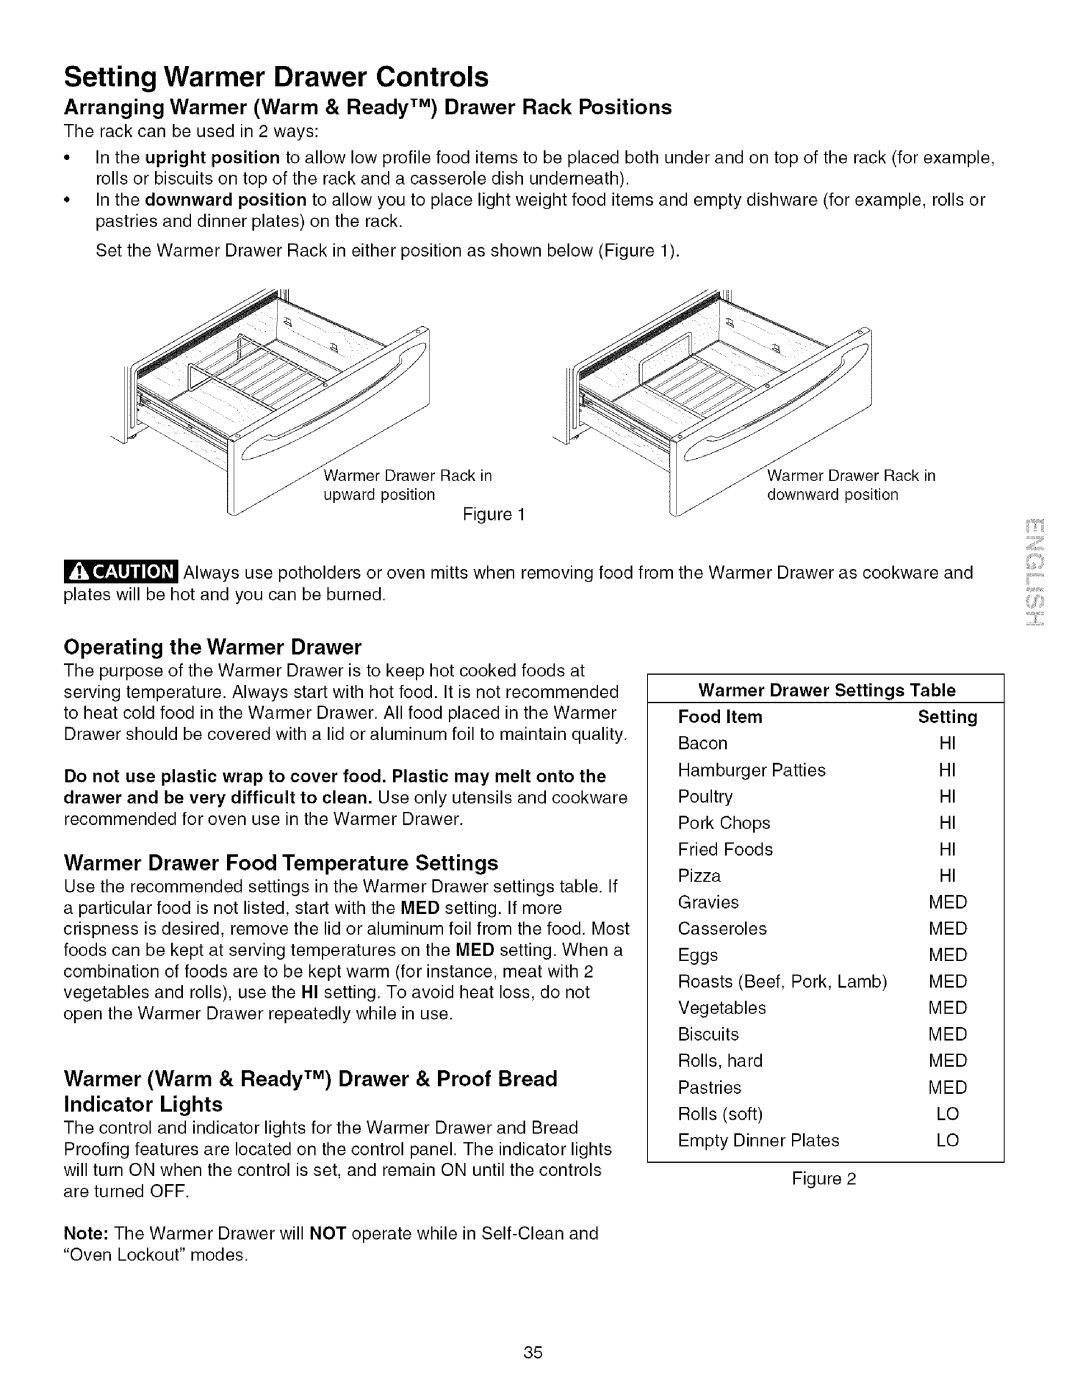 Kenmore 790.4672 Setting Warmer Drawer Controls, Operating the Warmer Drawer, Warmer Drawer Food Temperature Settings 